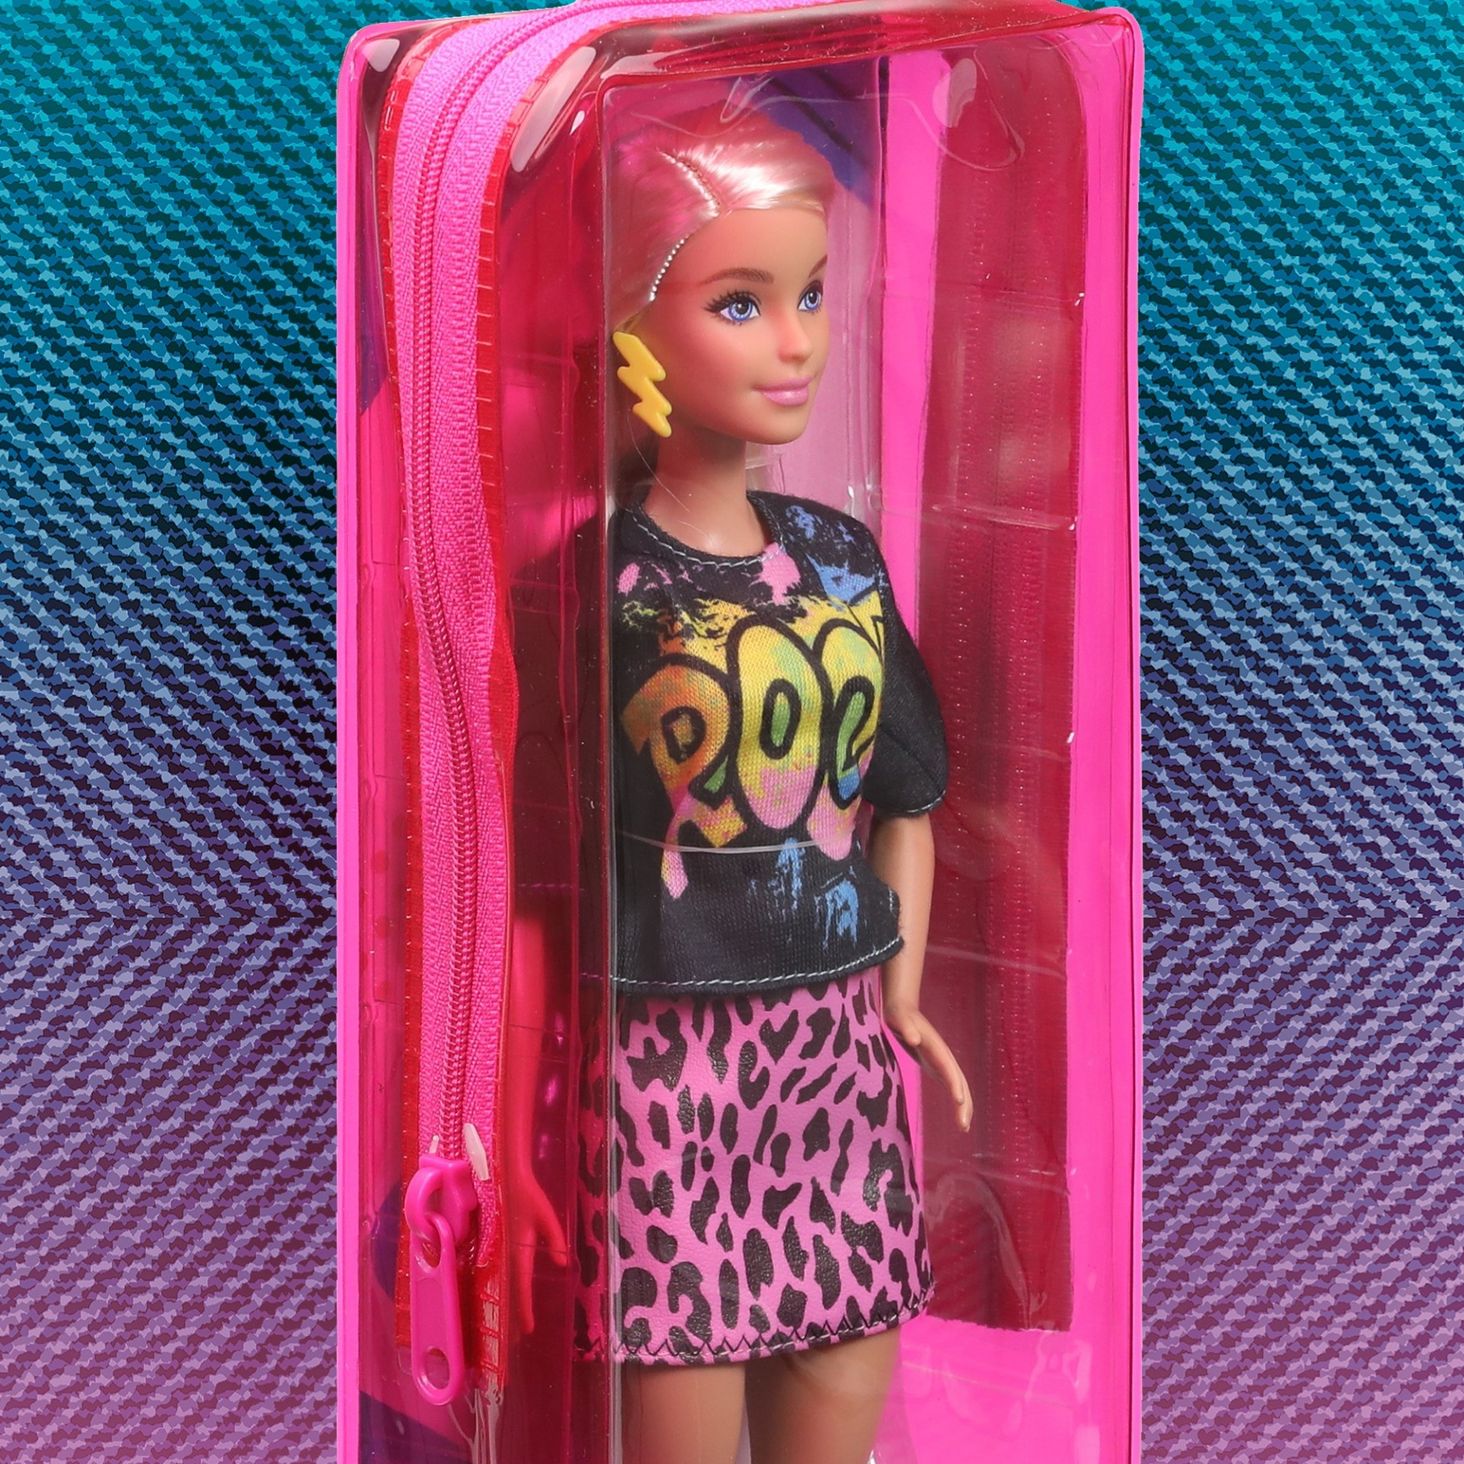 Barbie Fashionistas - Lalka 144 GYB00